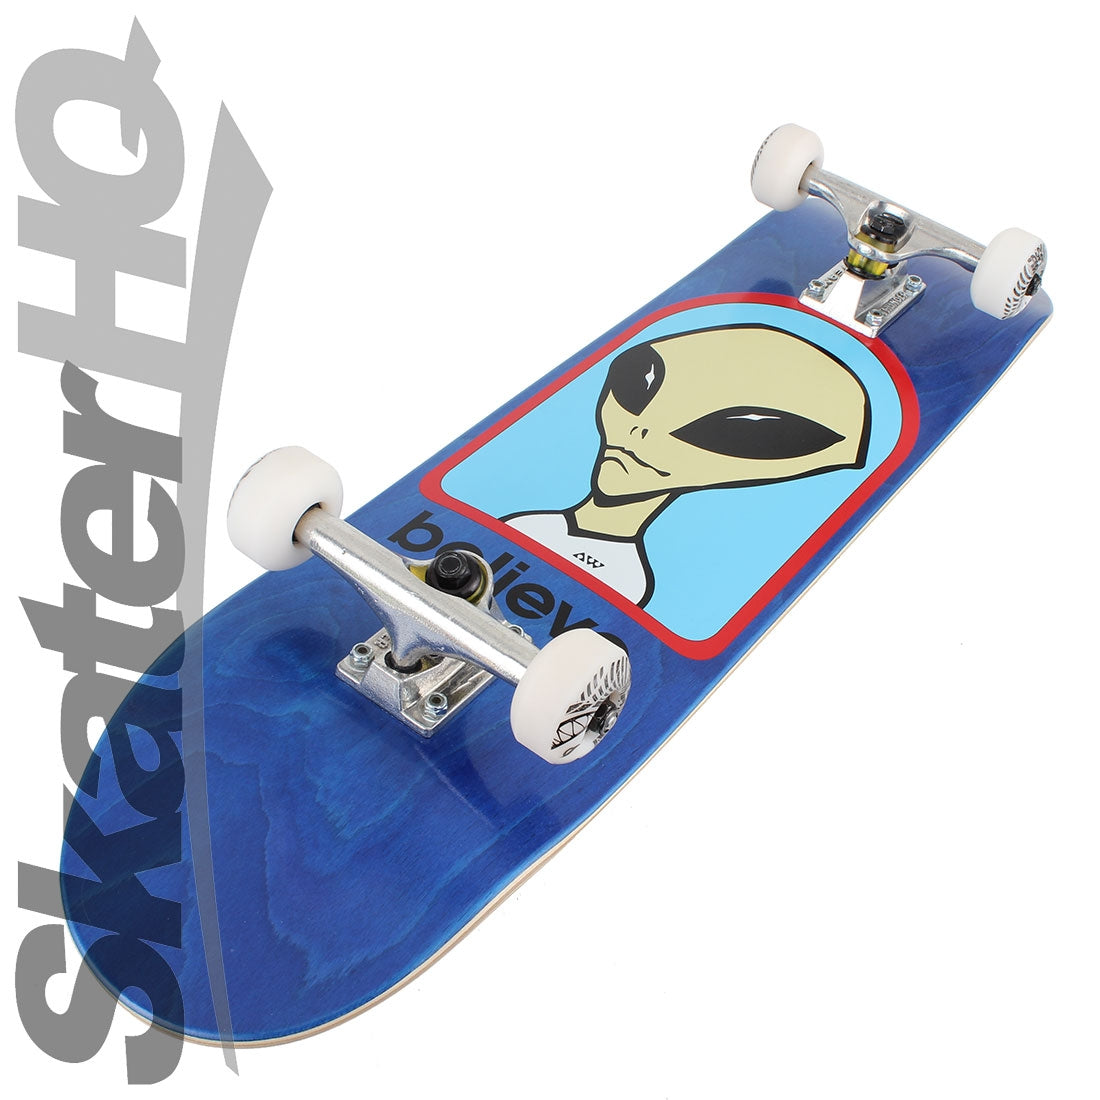 Alien Workshop Believe 7.75 Complete - Blue Skateboard Completes Modern Street